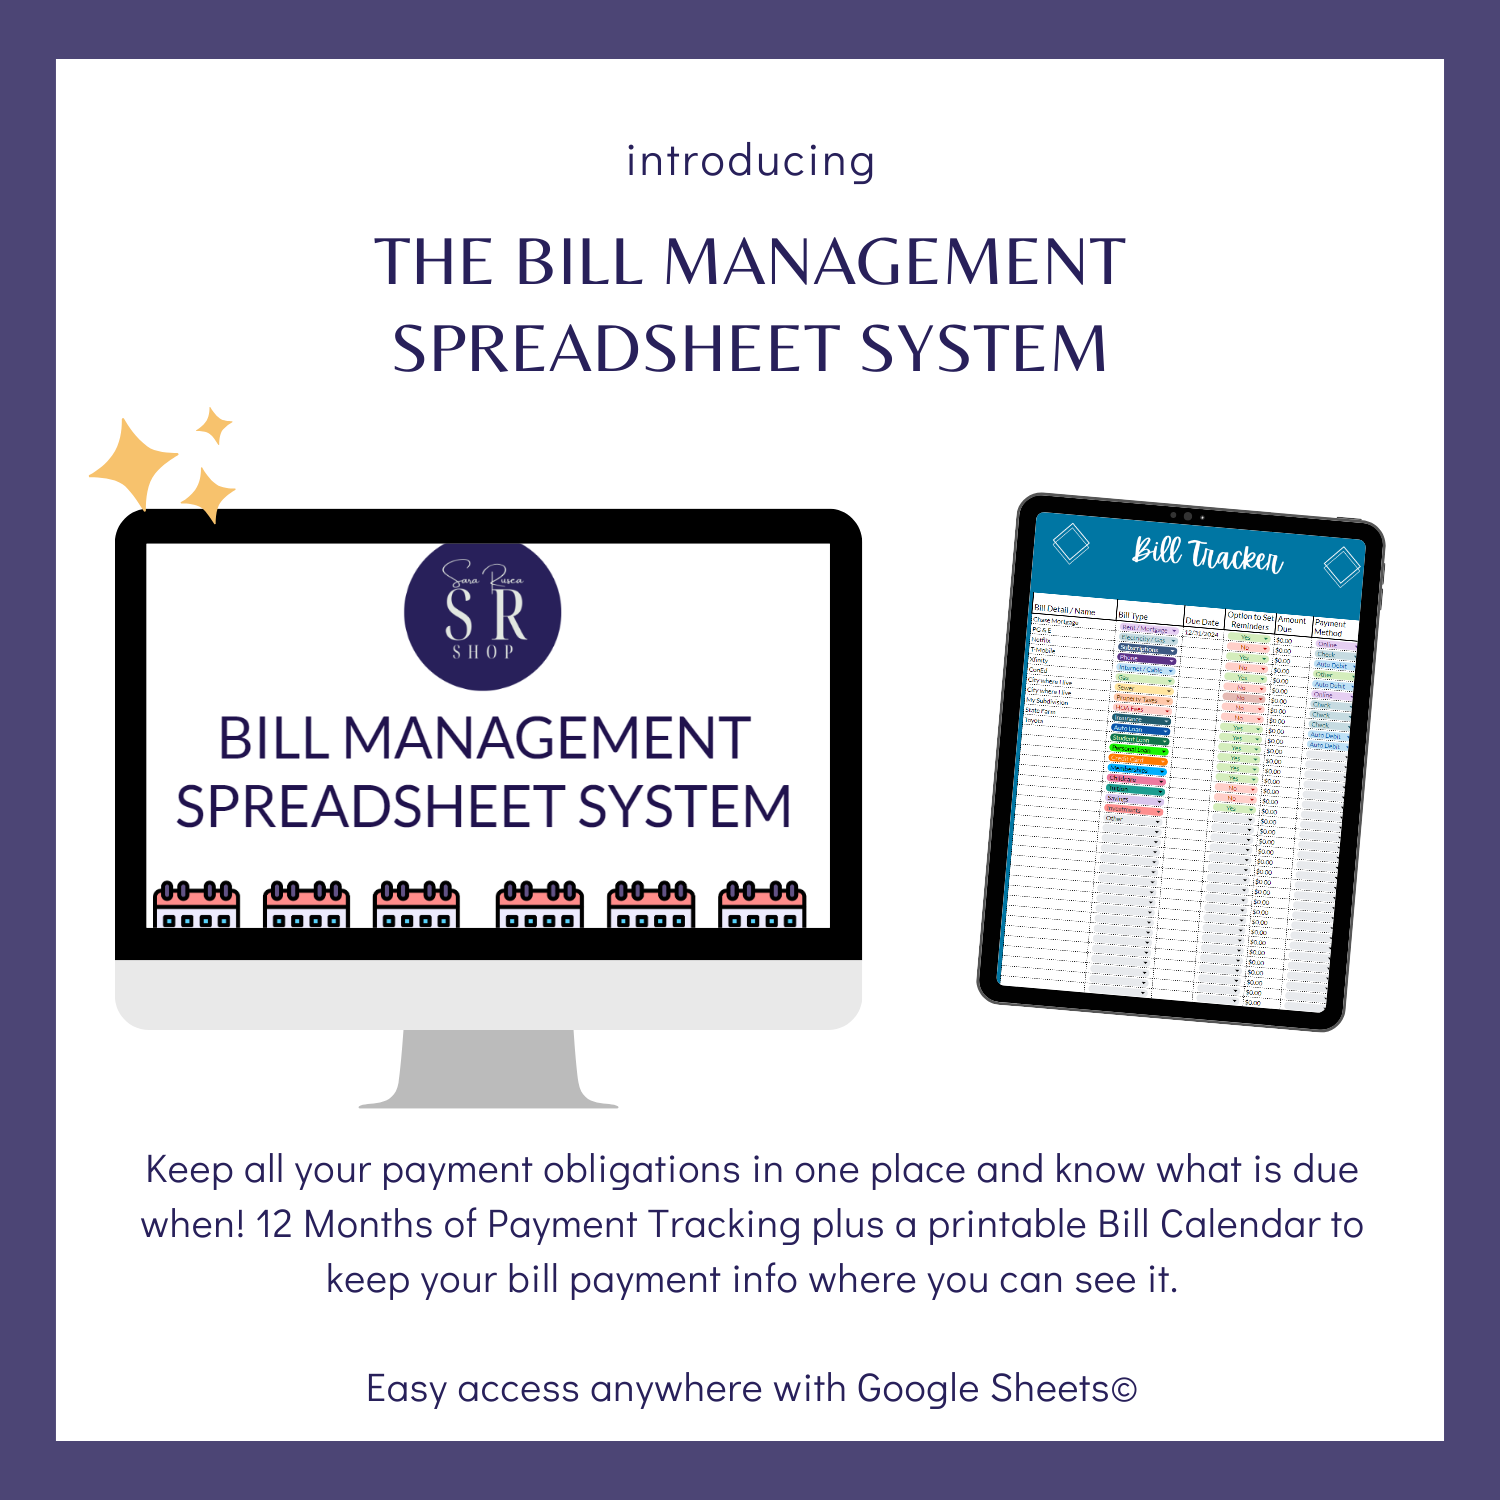 Bill Management Spreadsheet System